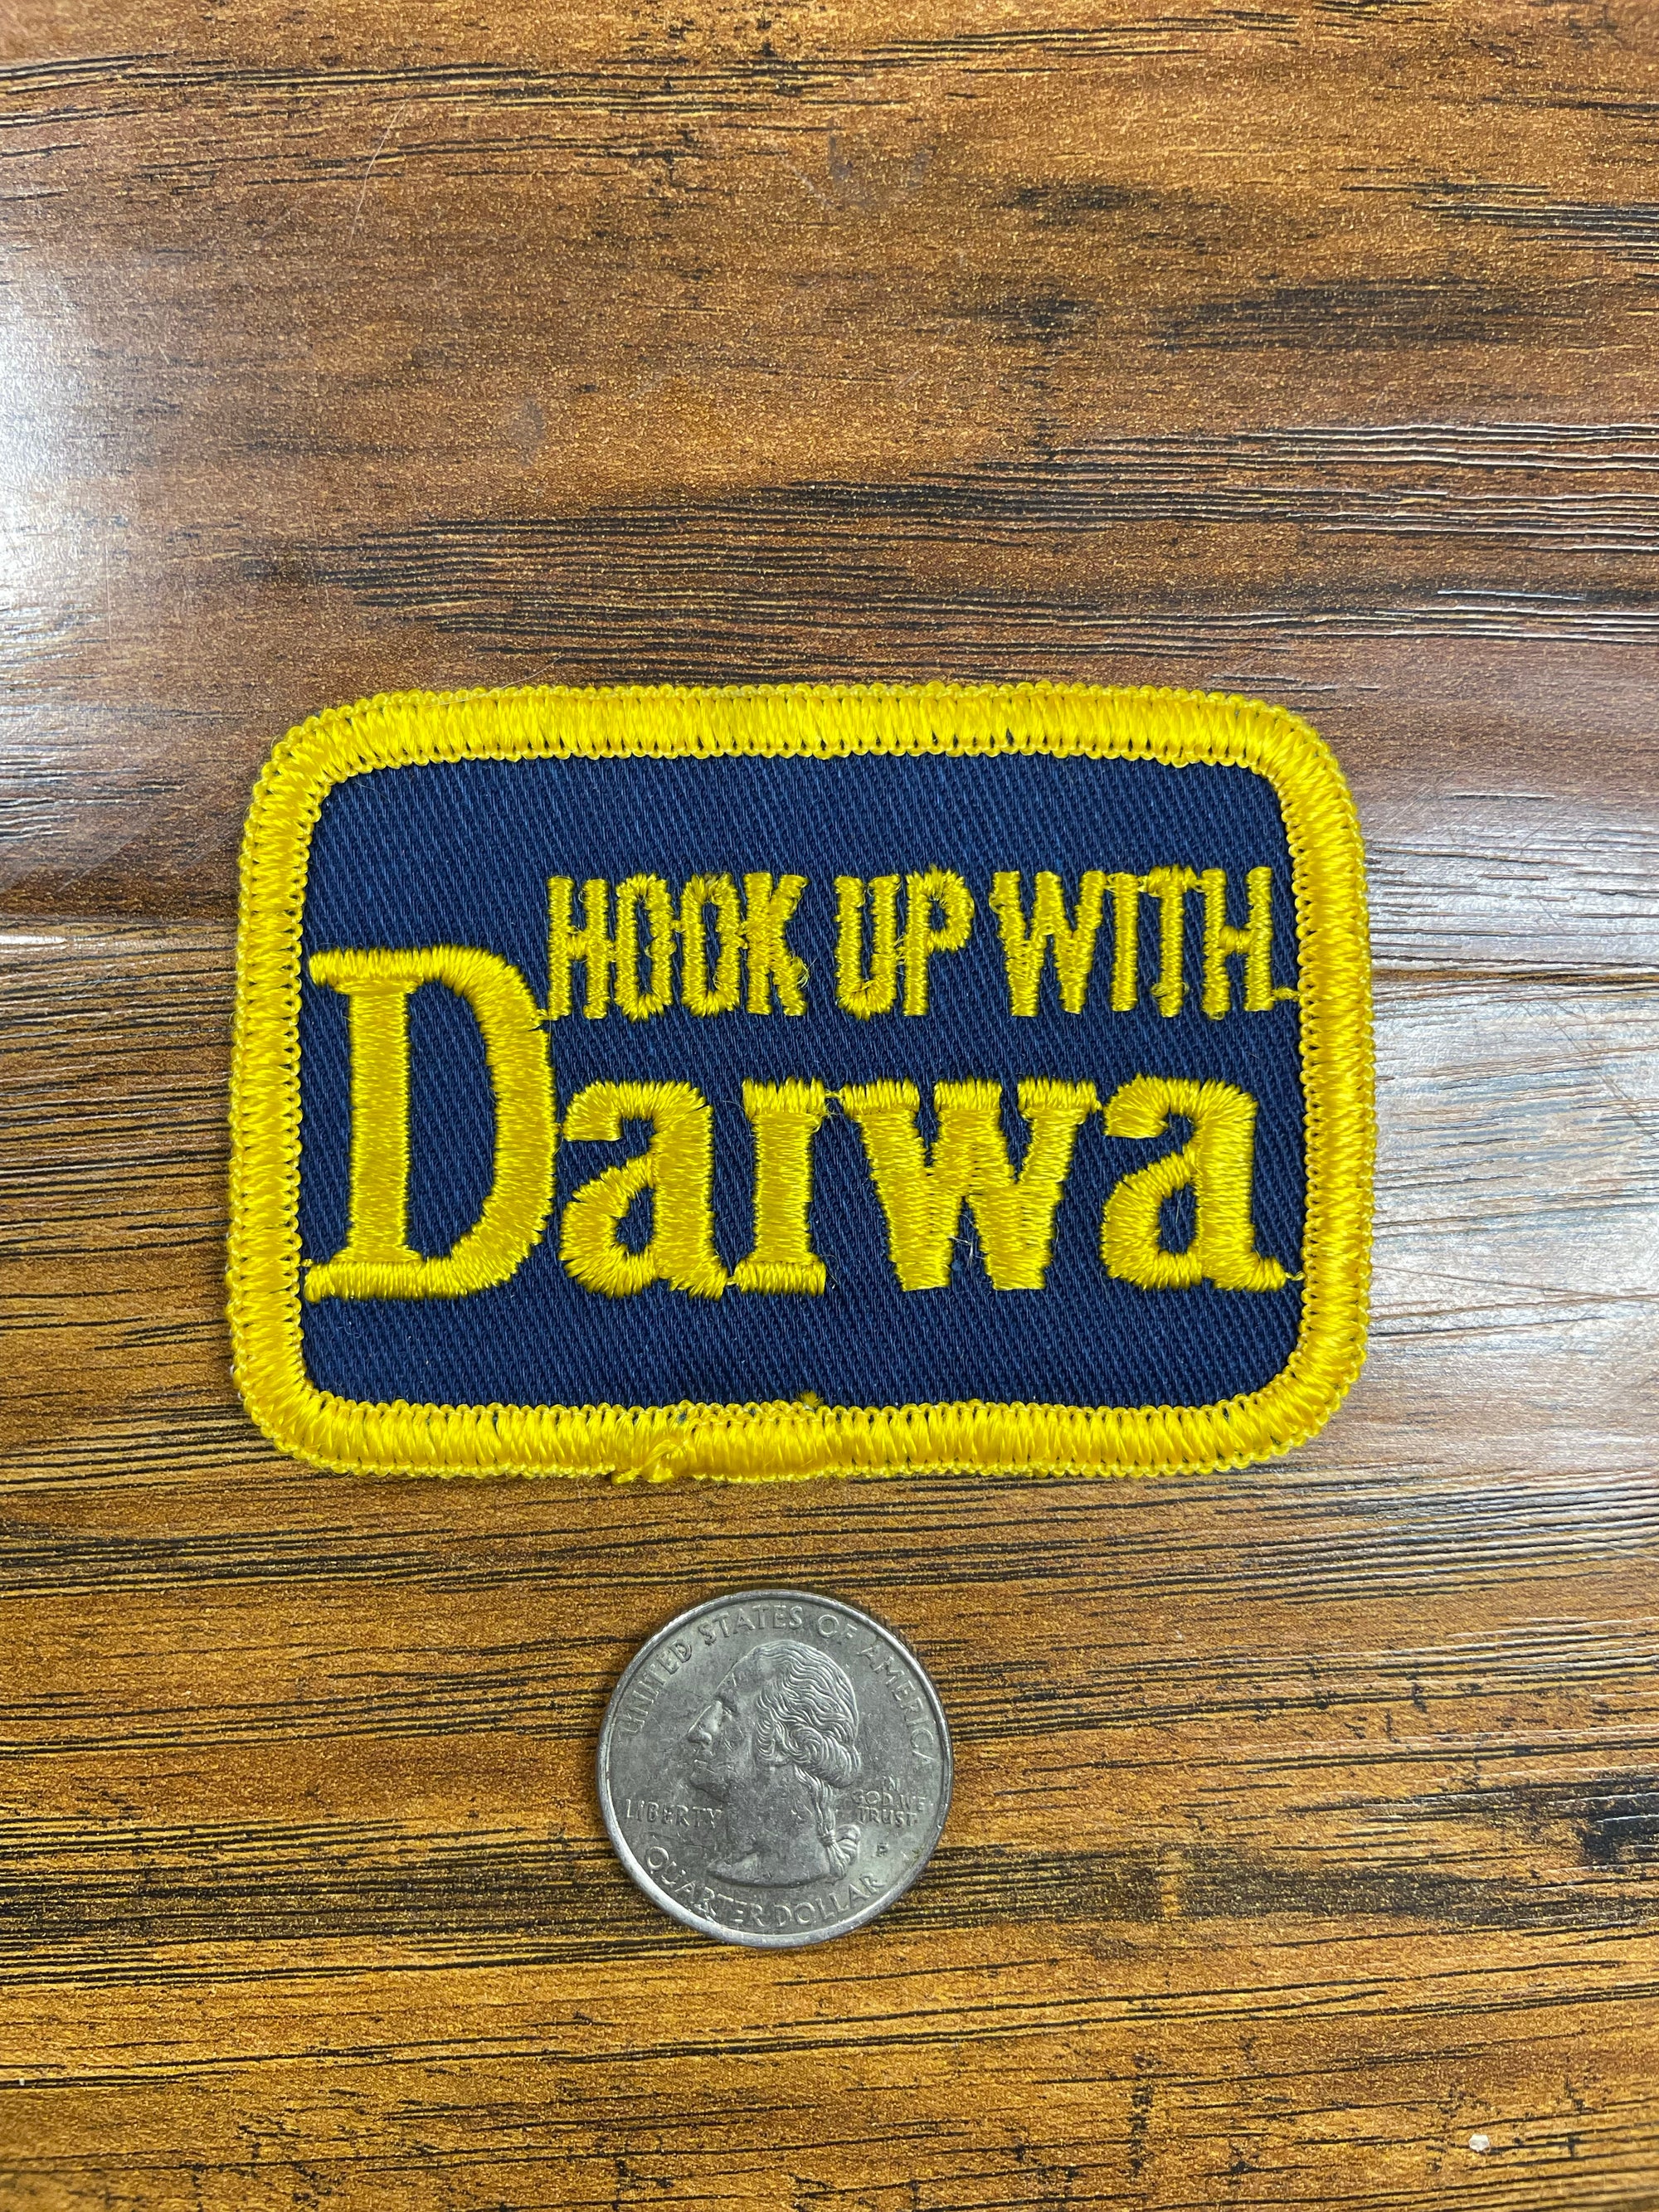 Vintage Hook Up With Daiwa